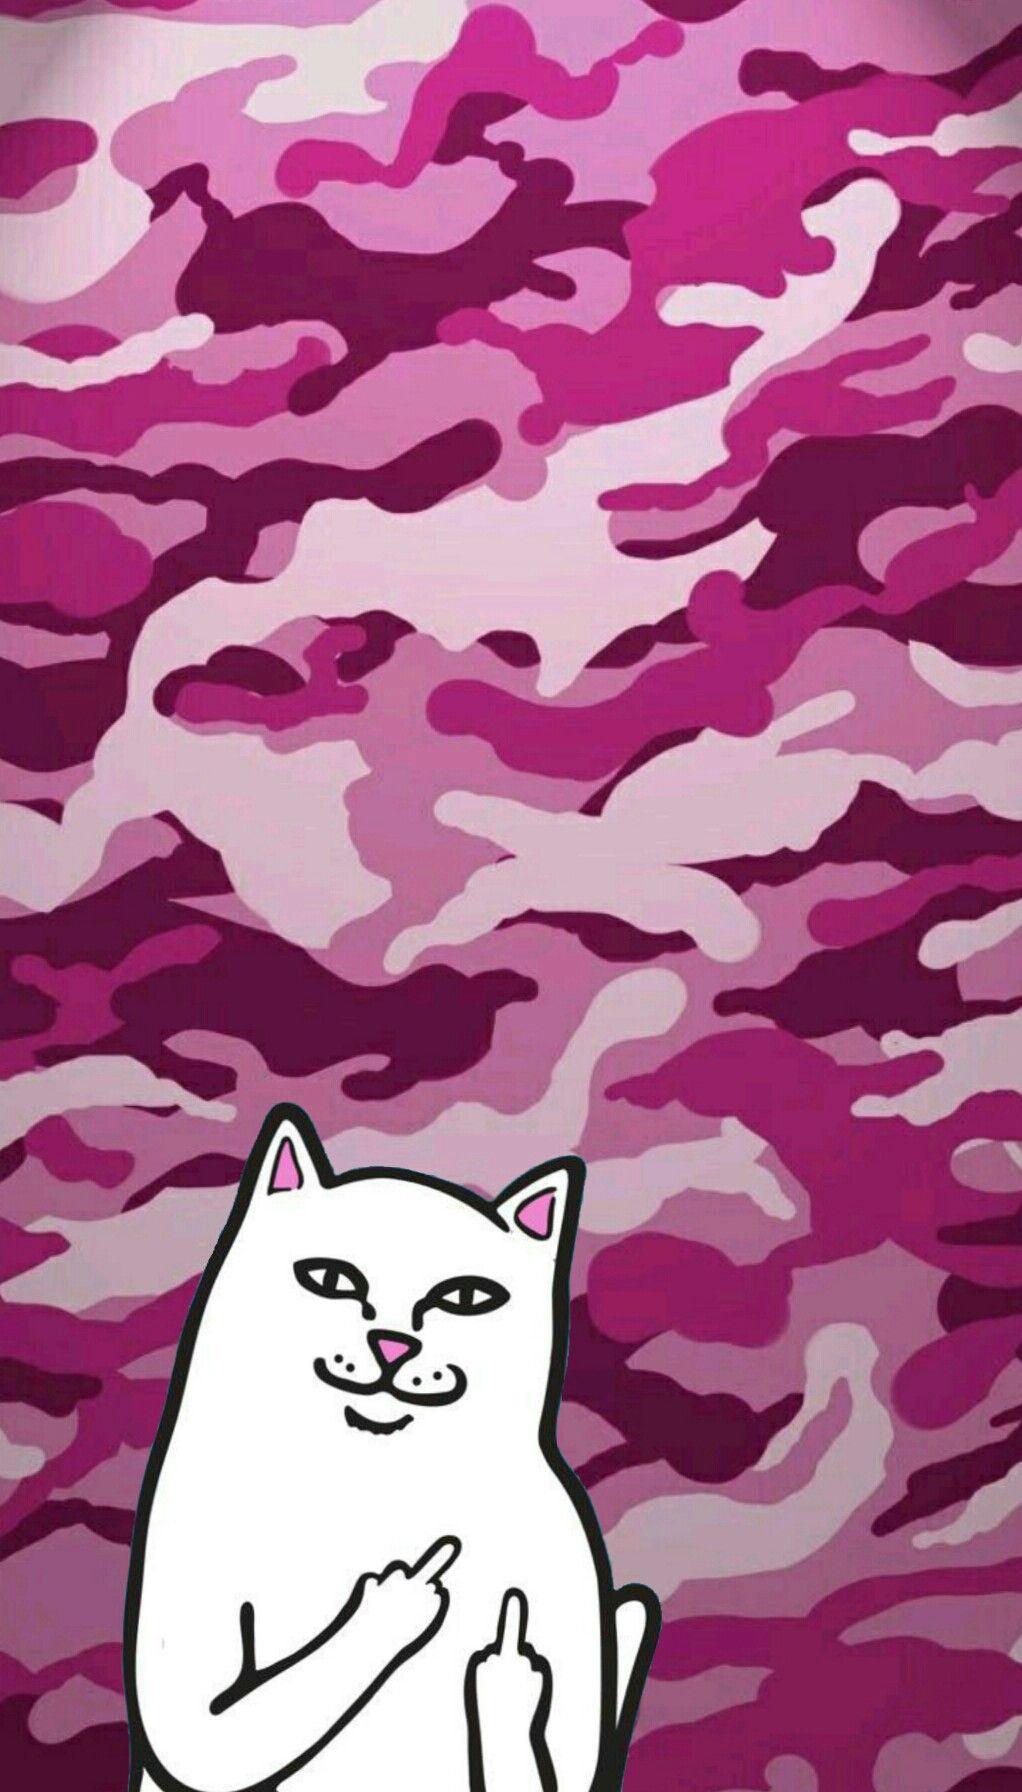 Ripndip iphone wallpaper #ripndip #middle #finger #cat #wallpaper